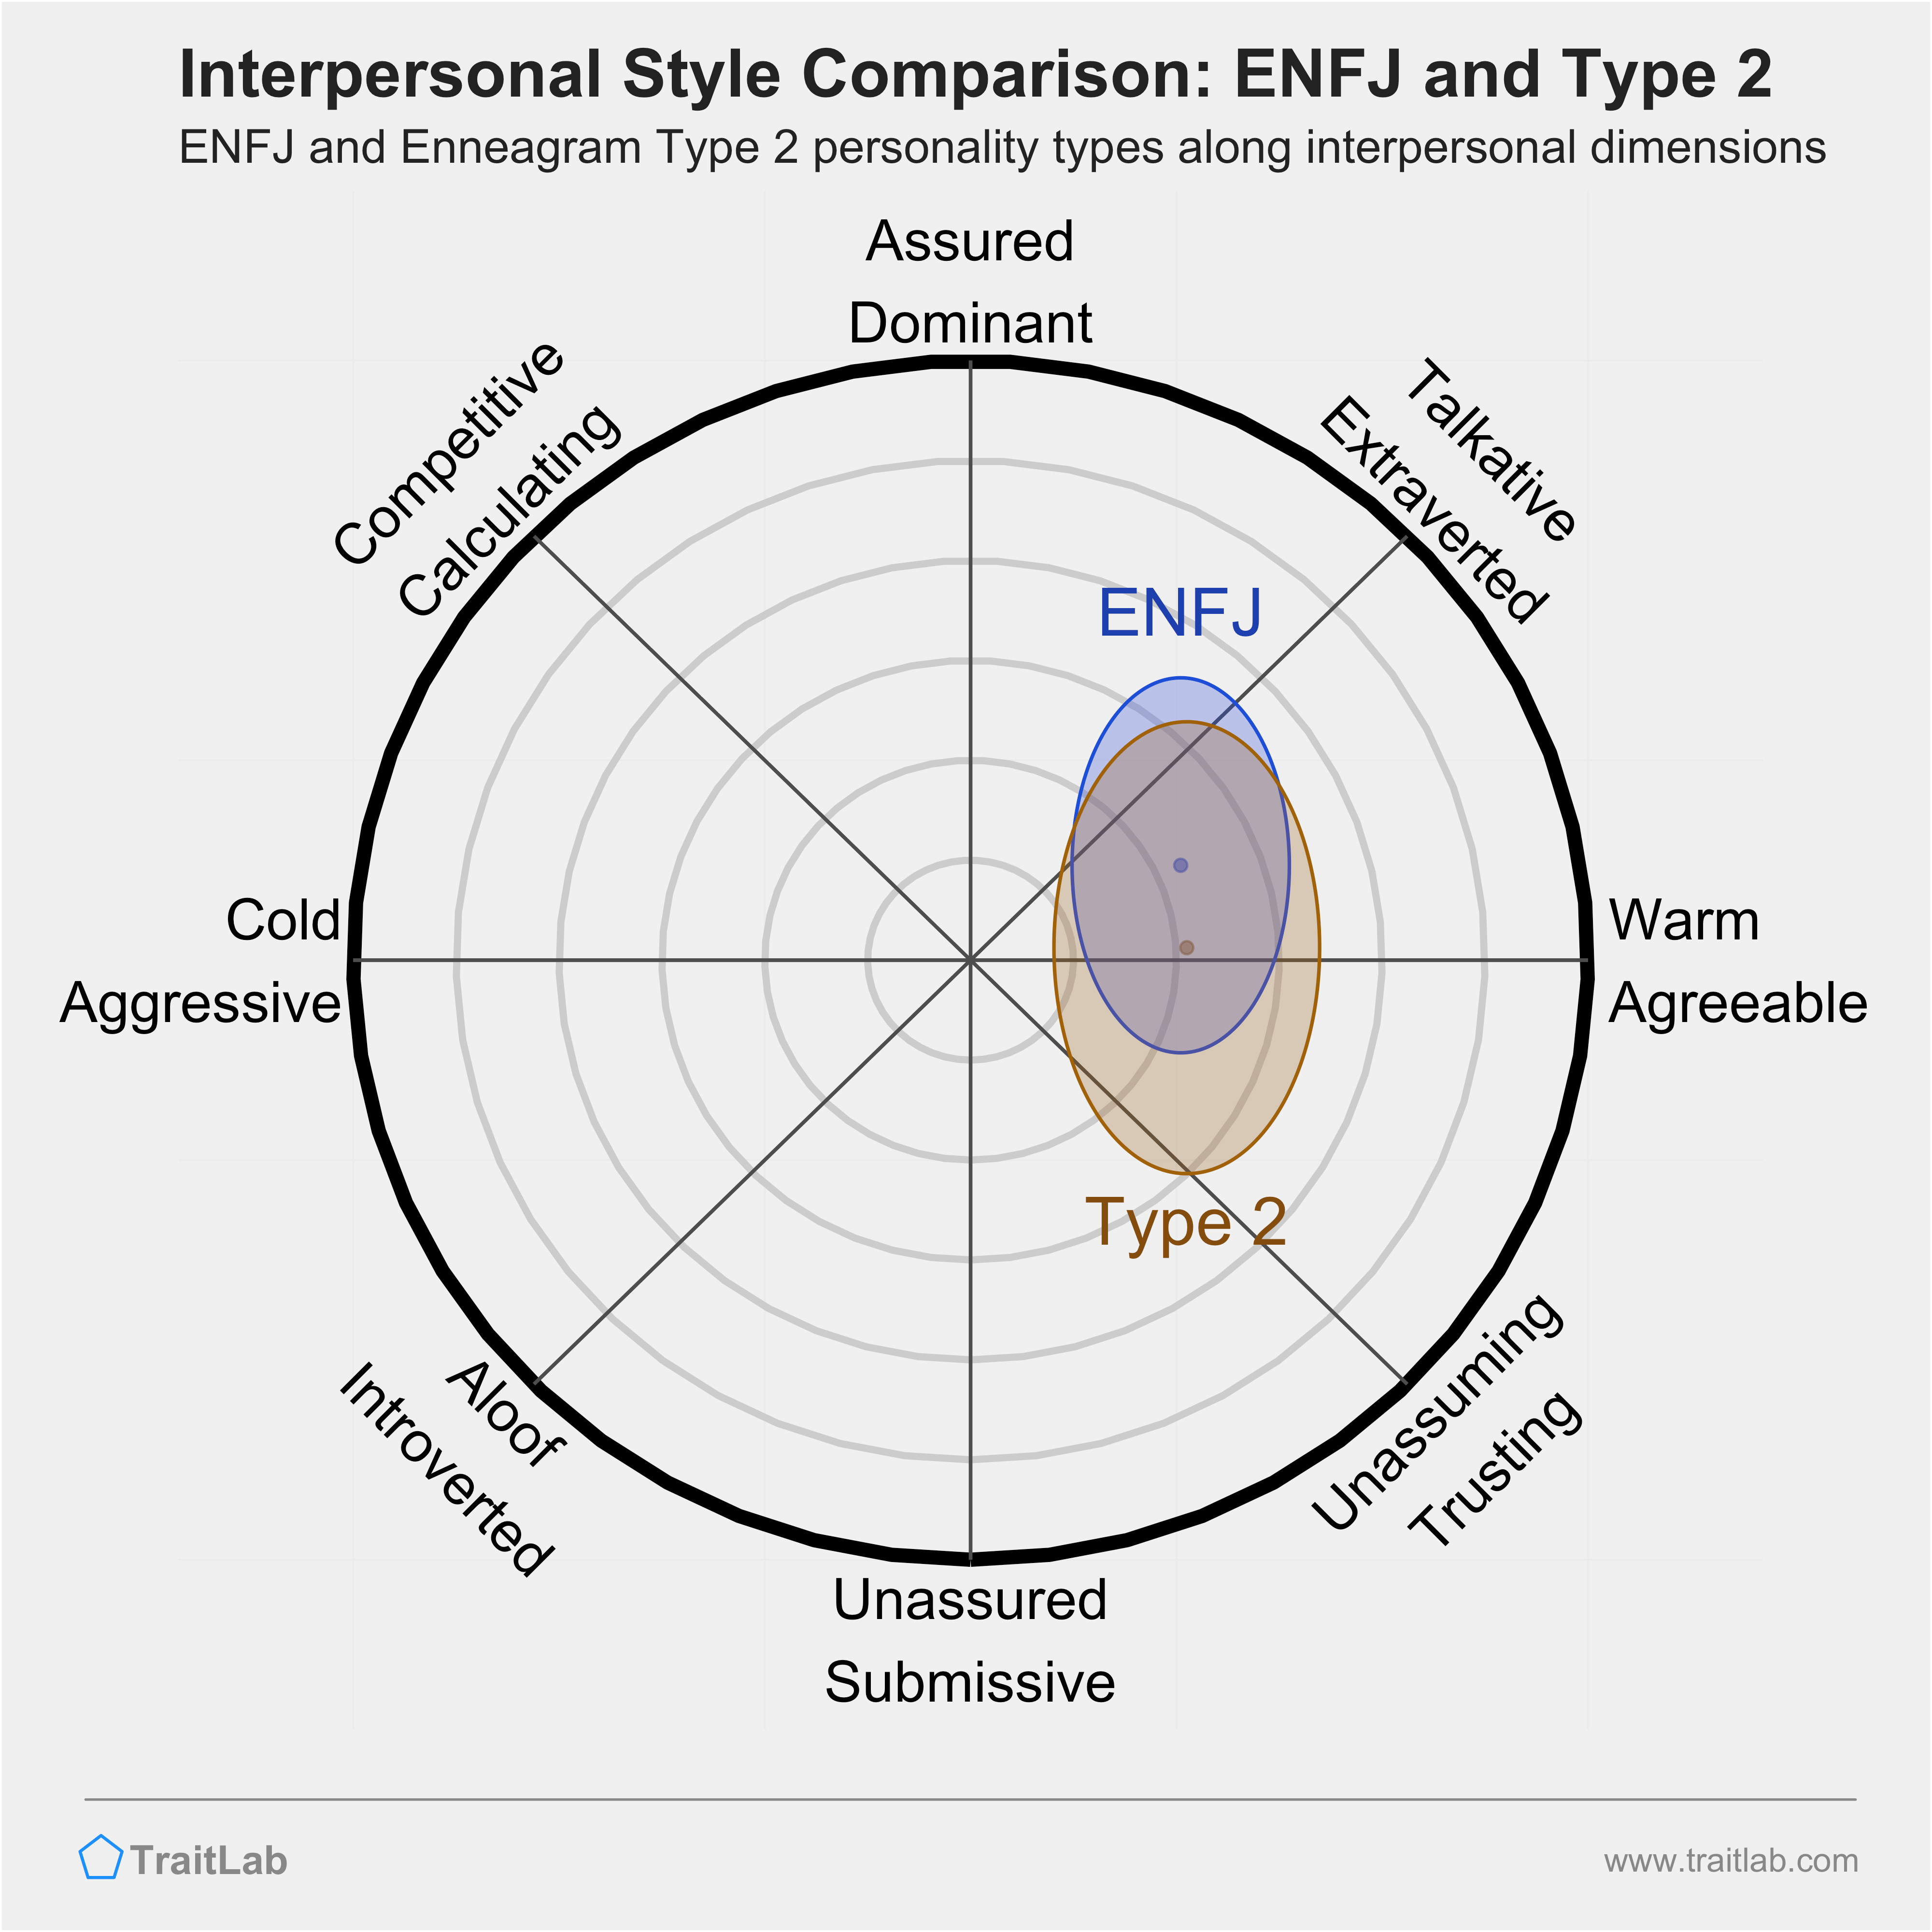 Enneagram ENFJ and Type 2 comparison across interpersonal dimensions